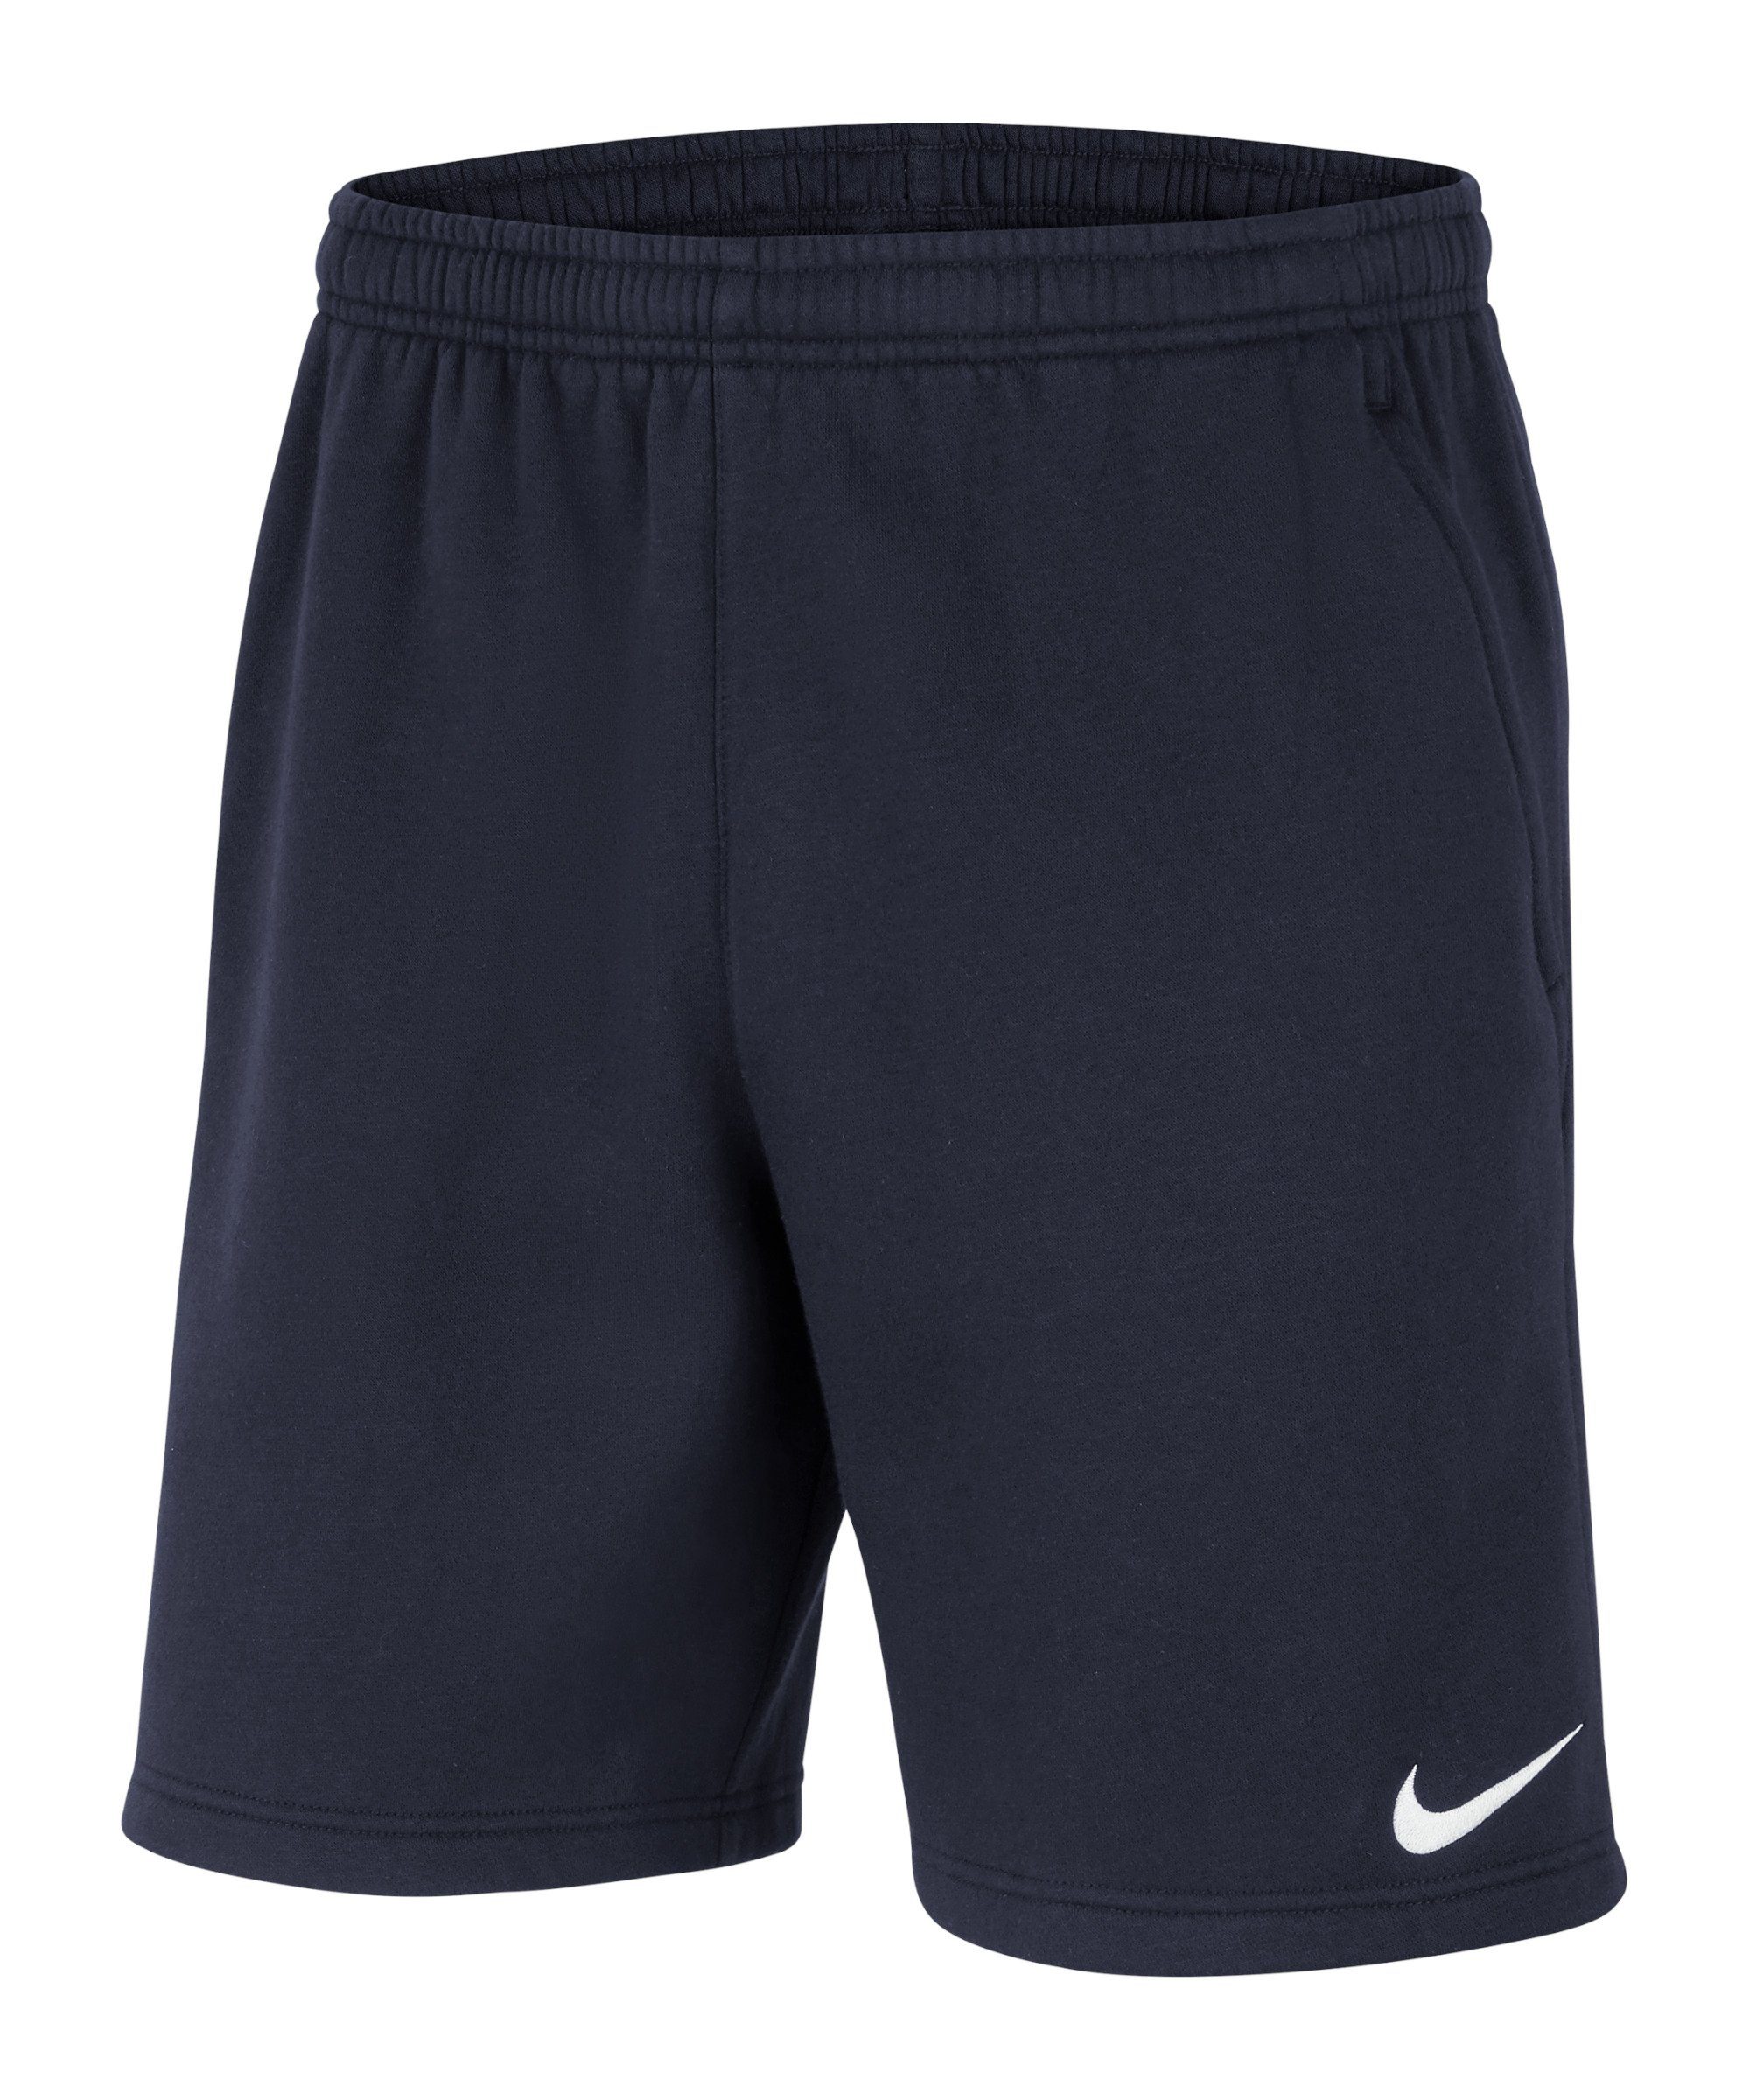 blauweiss Fleece Short 20 Park Nike Sporthose